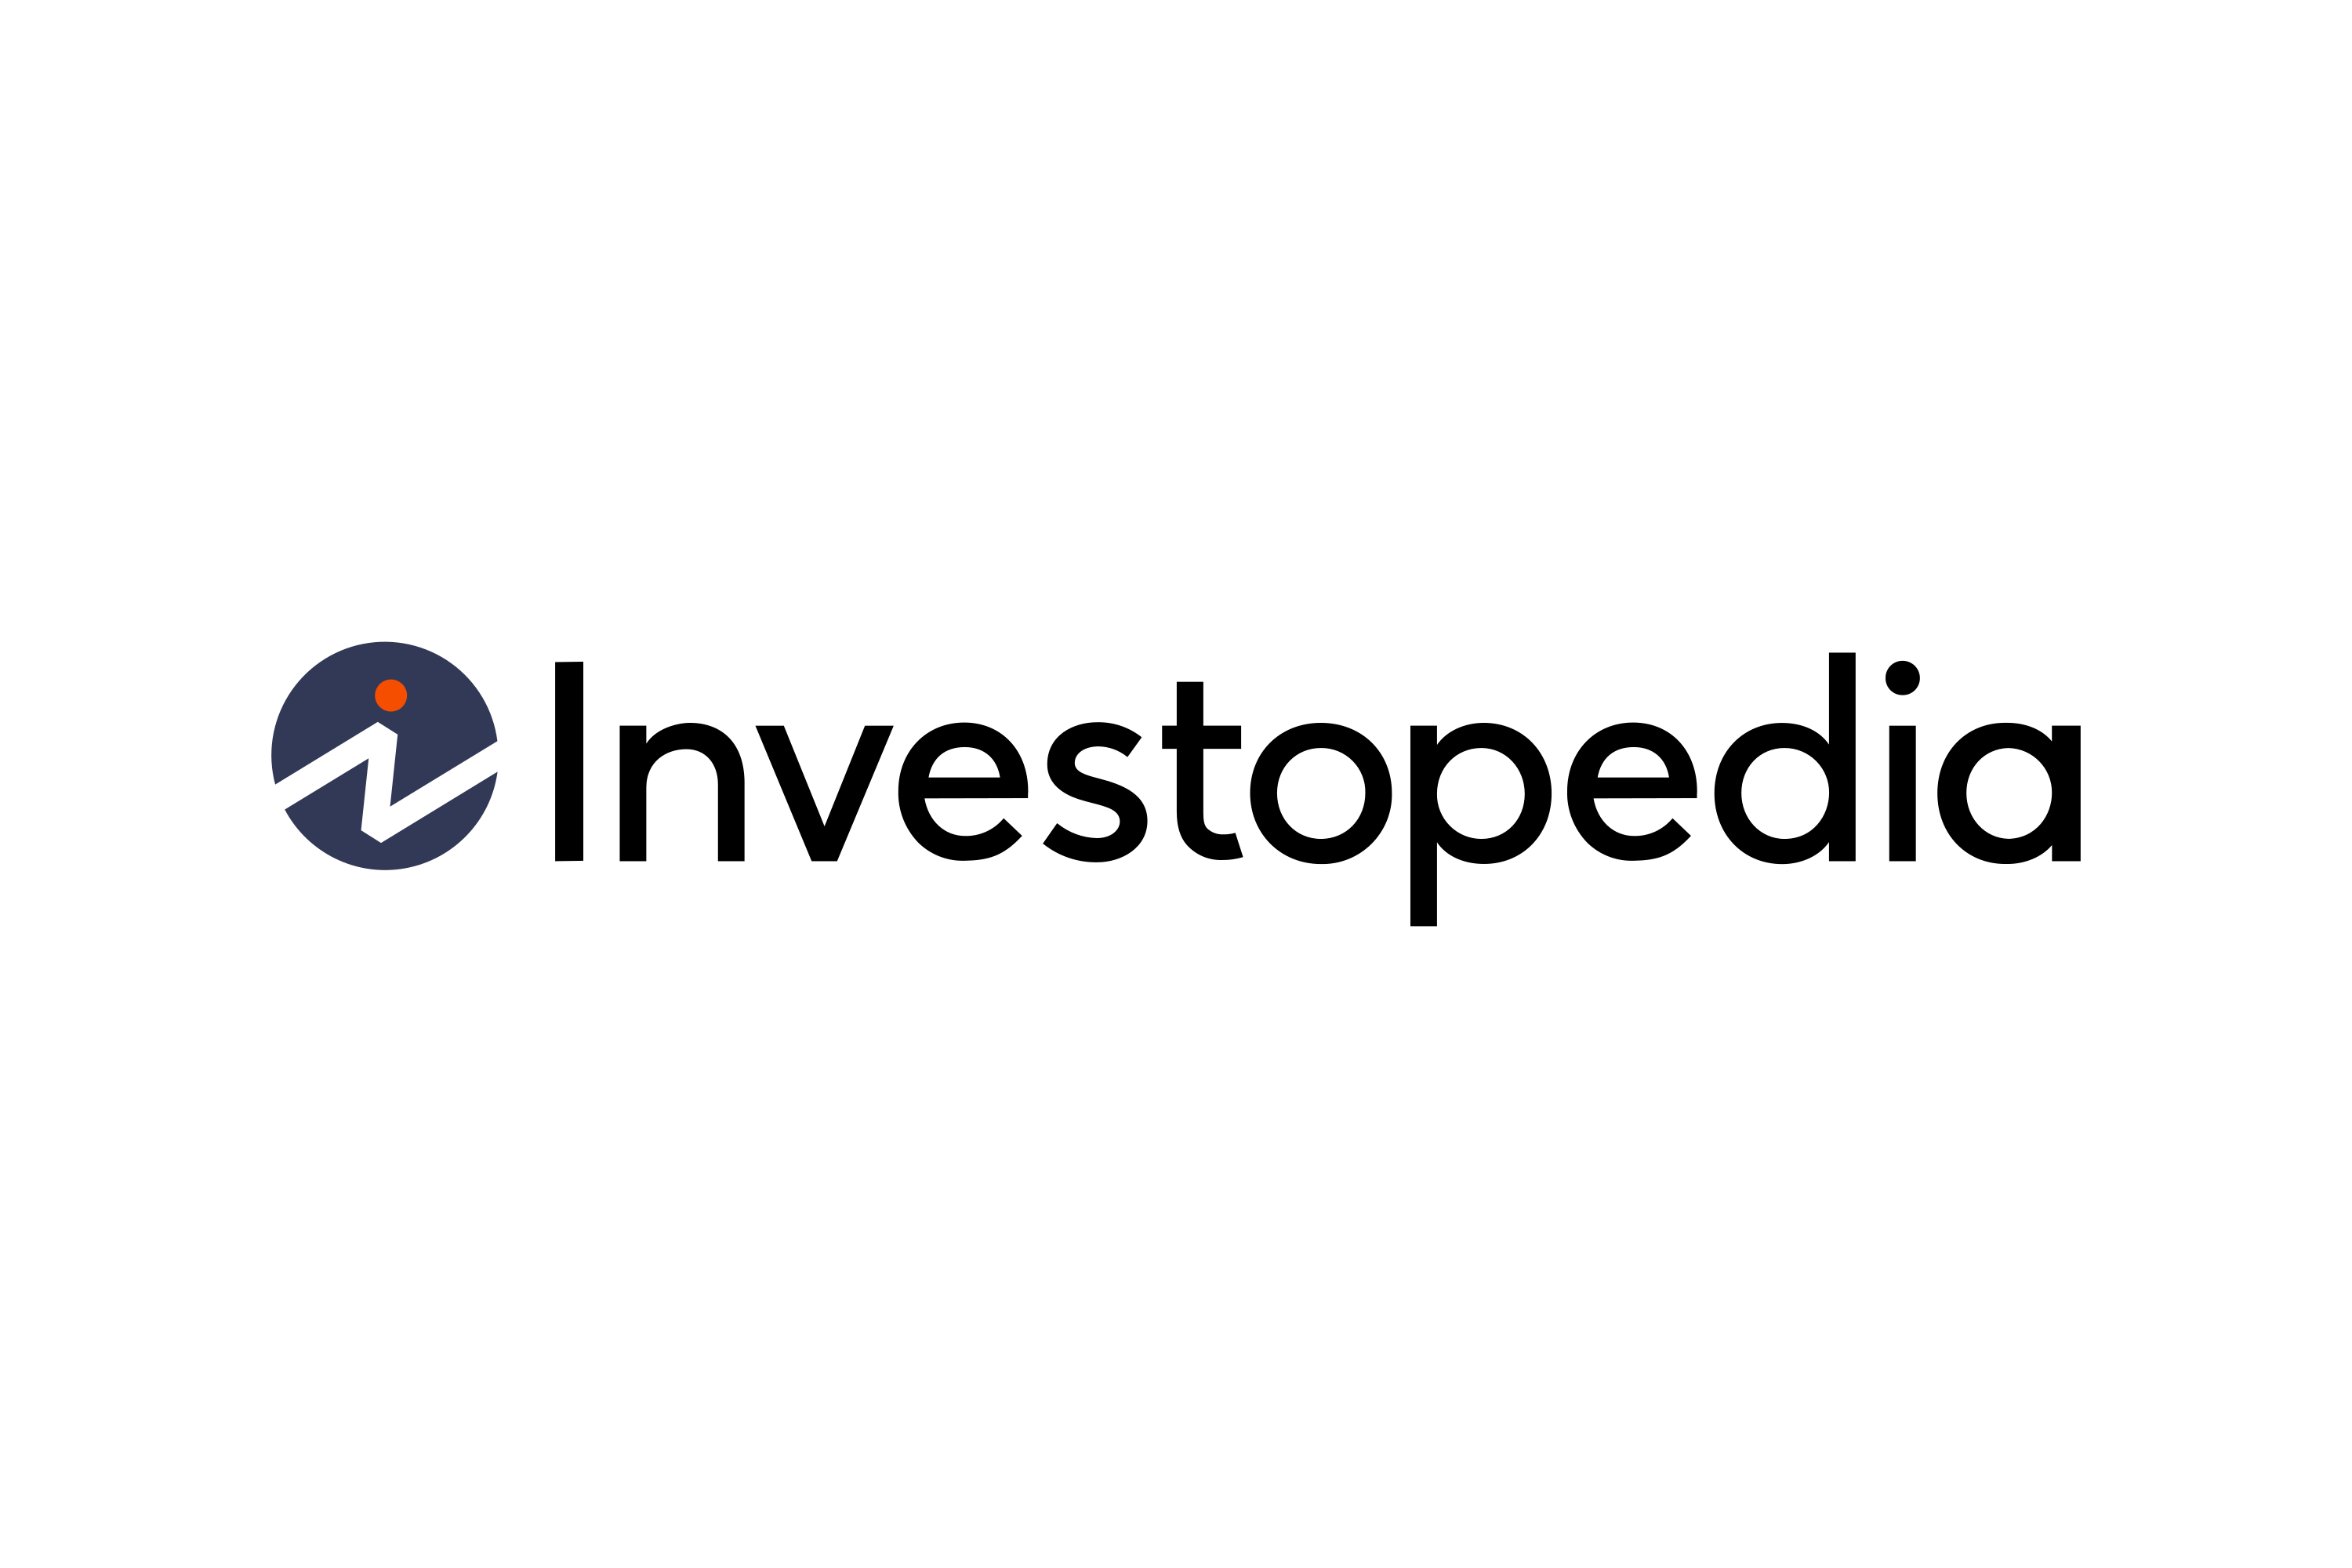 A logo of Investopedia